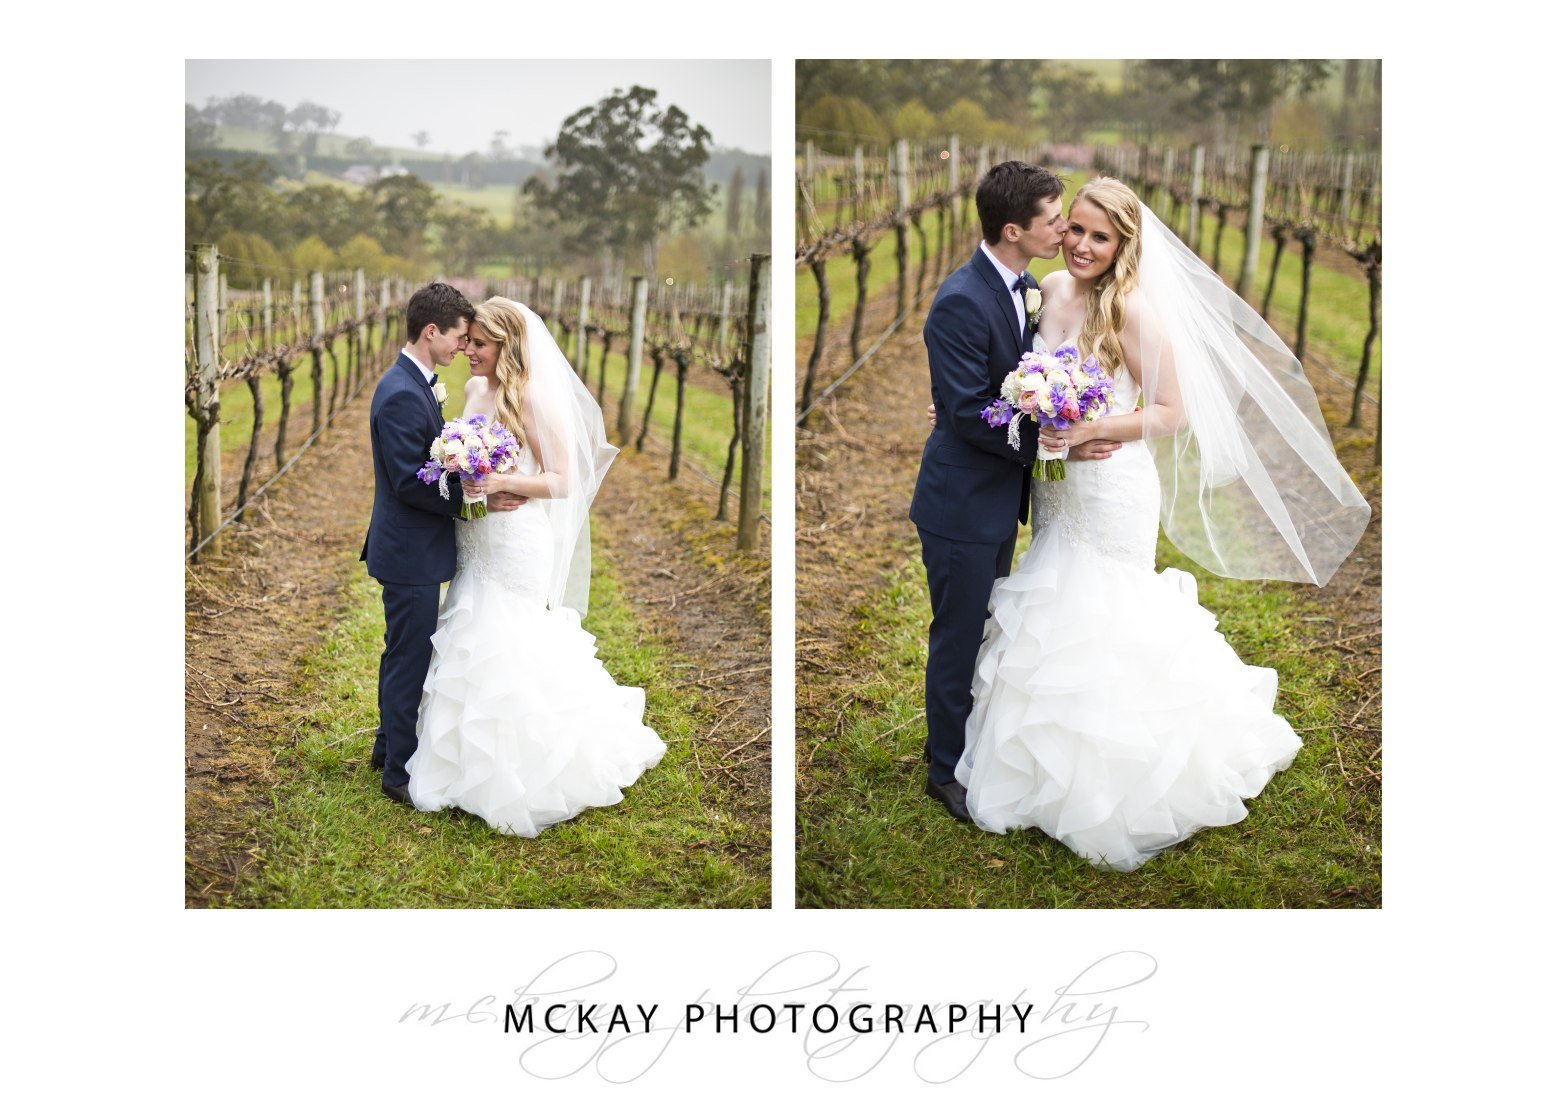 Danielle & Jerrod in the grape vine rows at Centennial Vineyards wedding